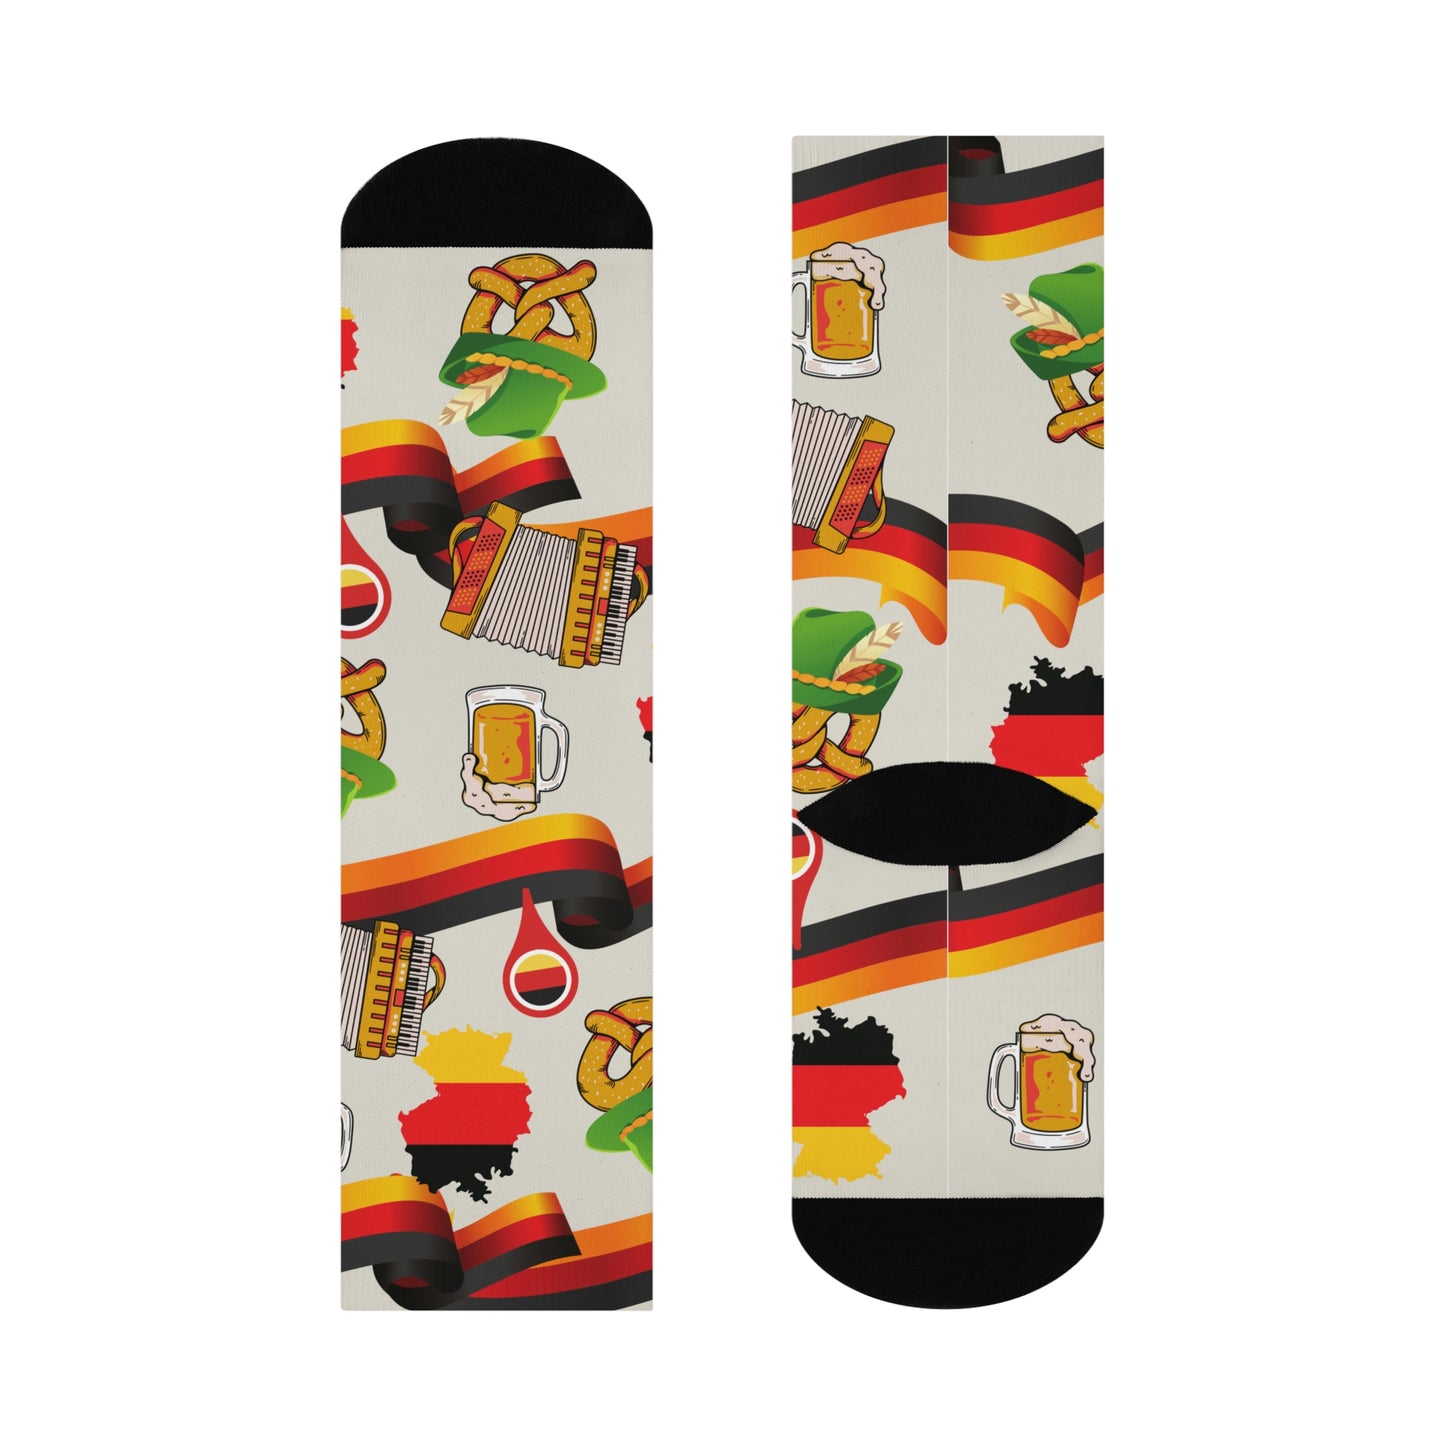 German Socks, Pretzels